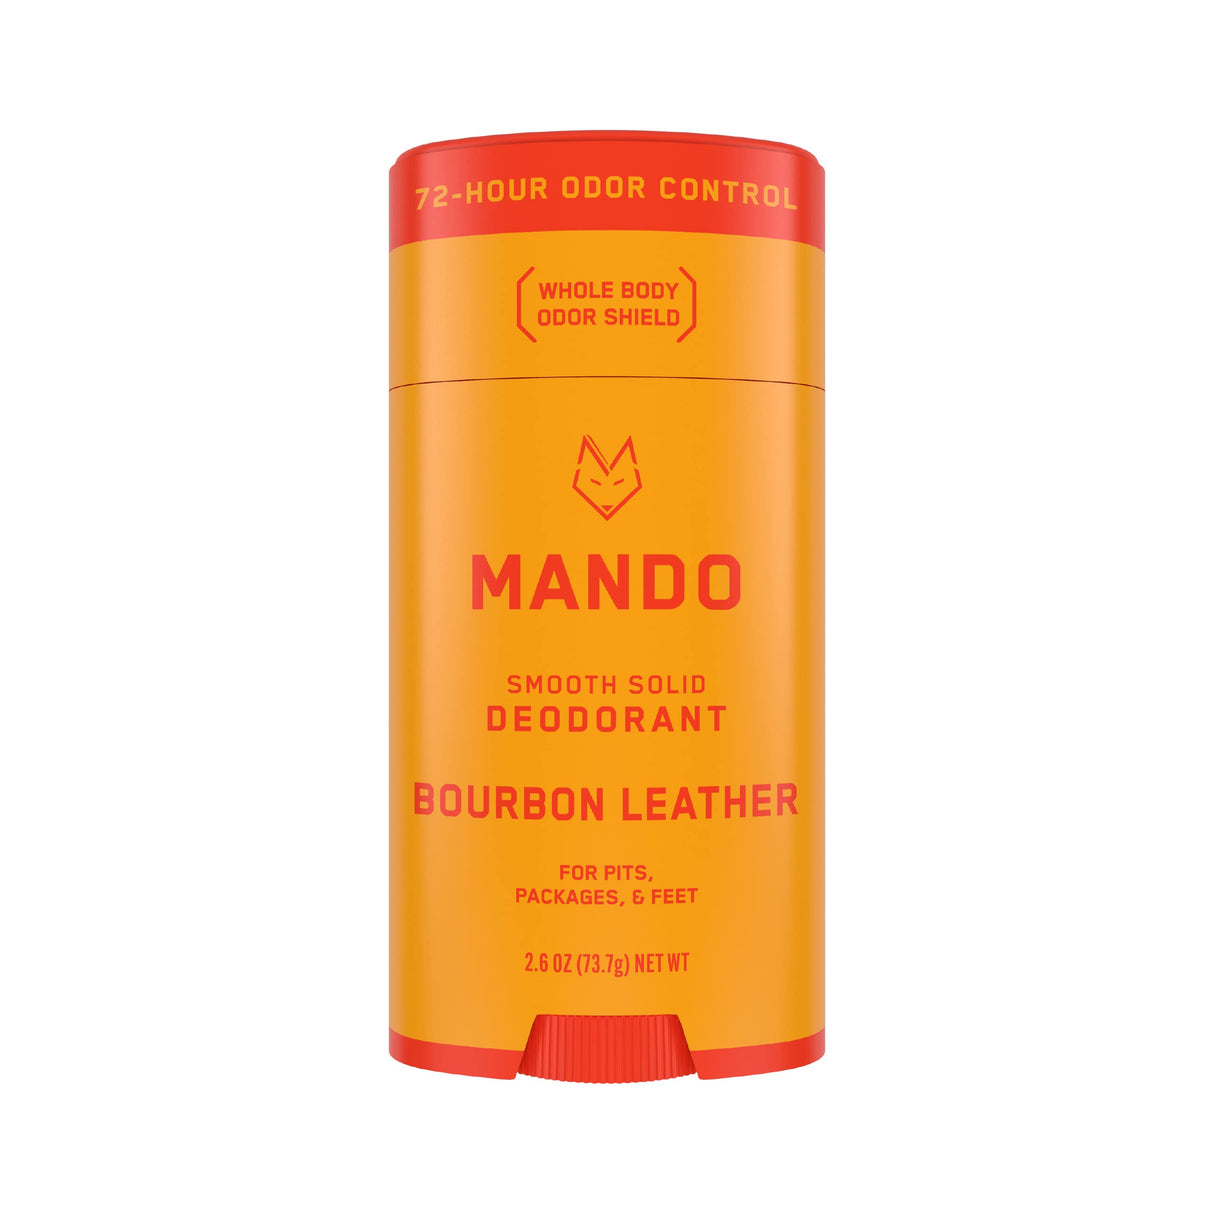 Mando Whole Body Deodorant For Men - Smooth Solid Stick -  72 Hour Odor Control - Aluminum Free, Baking Soda Free, Skin Safe - 2.6 Ounce (Bourbon Leather)